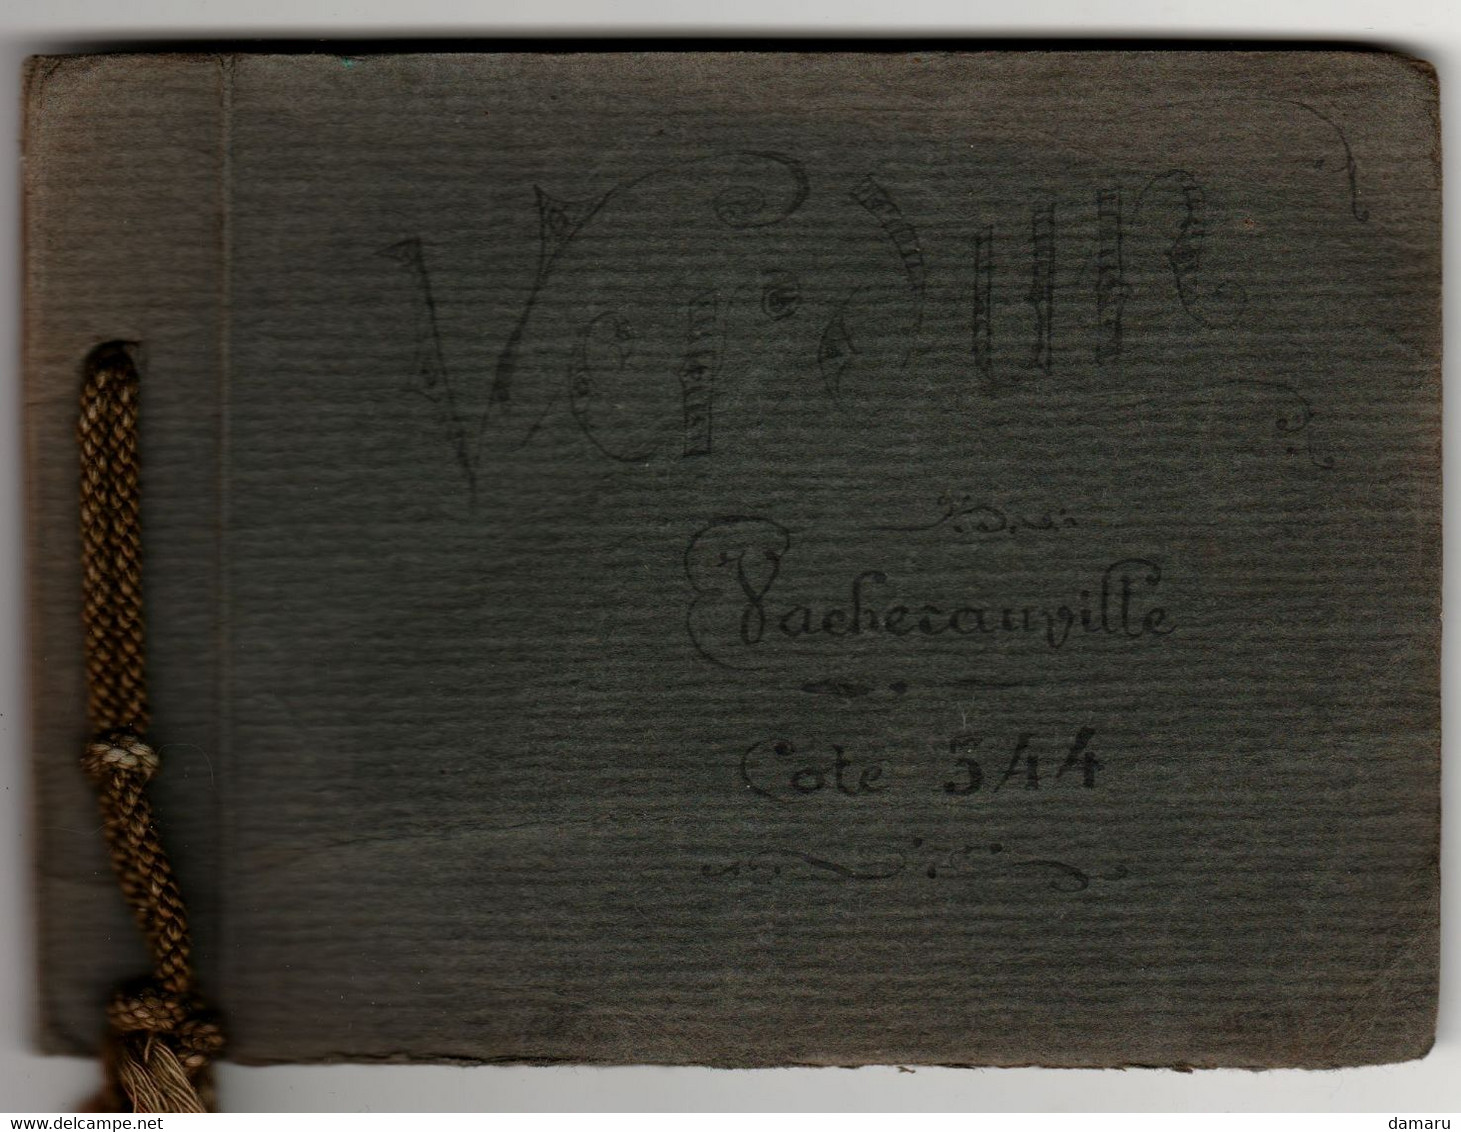 PETIT ALBUM PHOTO VERDUN VACHERAUVILLE Cote 344 Guerre 1914 1918 - 1914-18